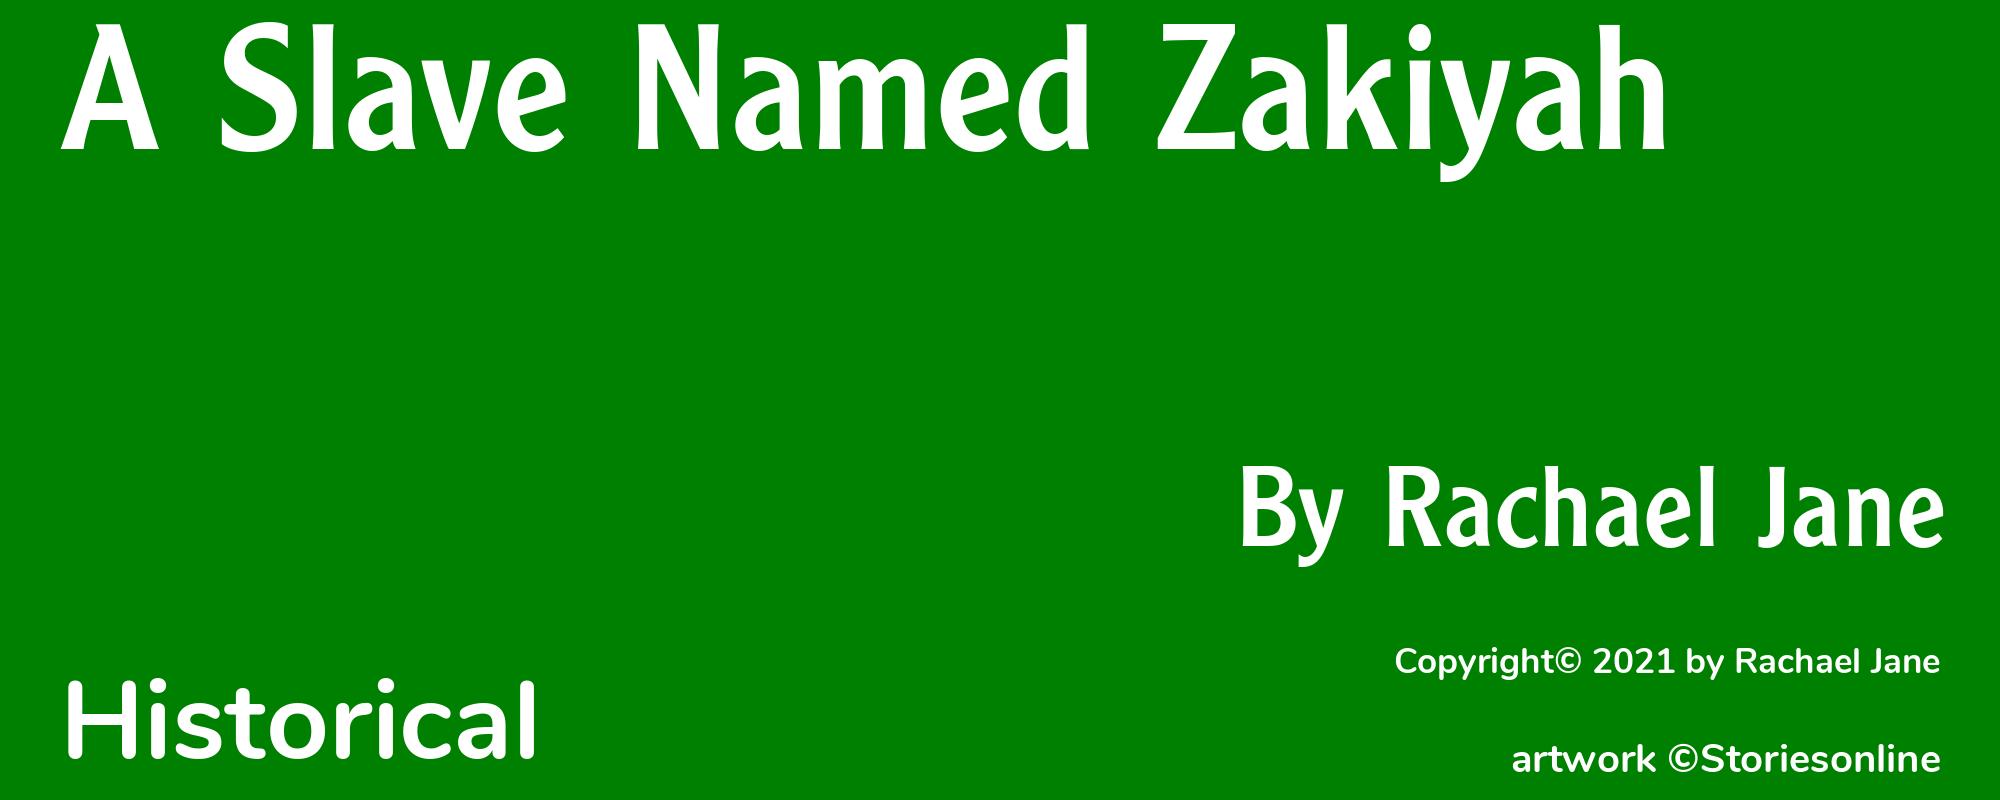 A Slave Named Zakiyah - Cover